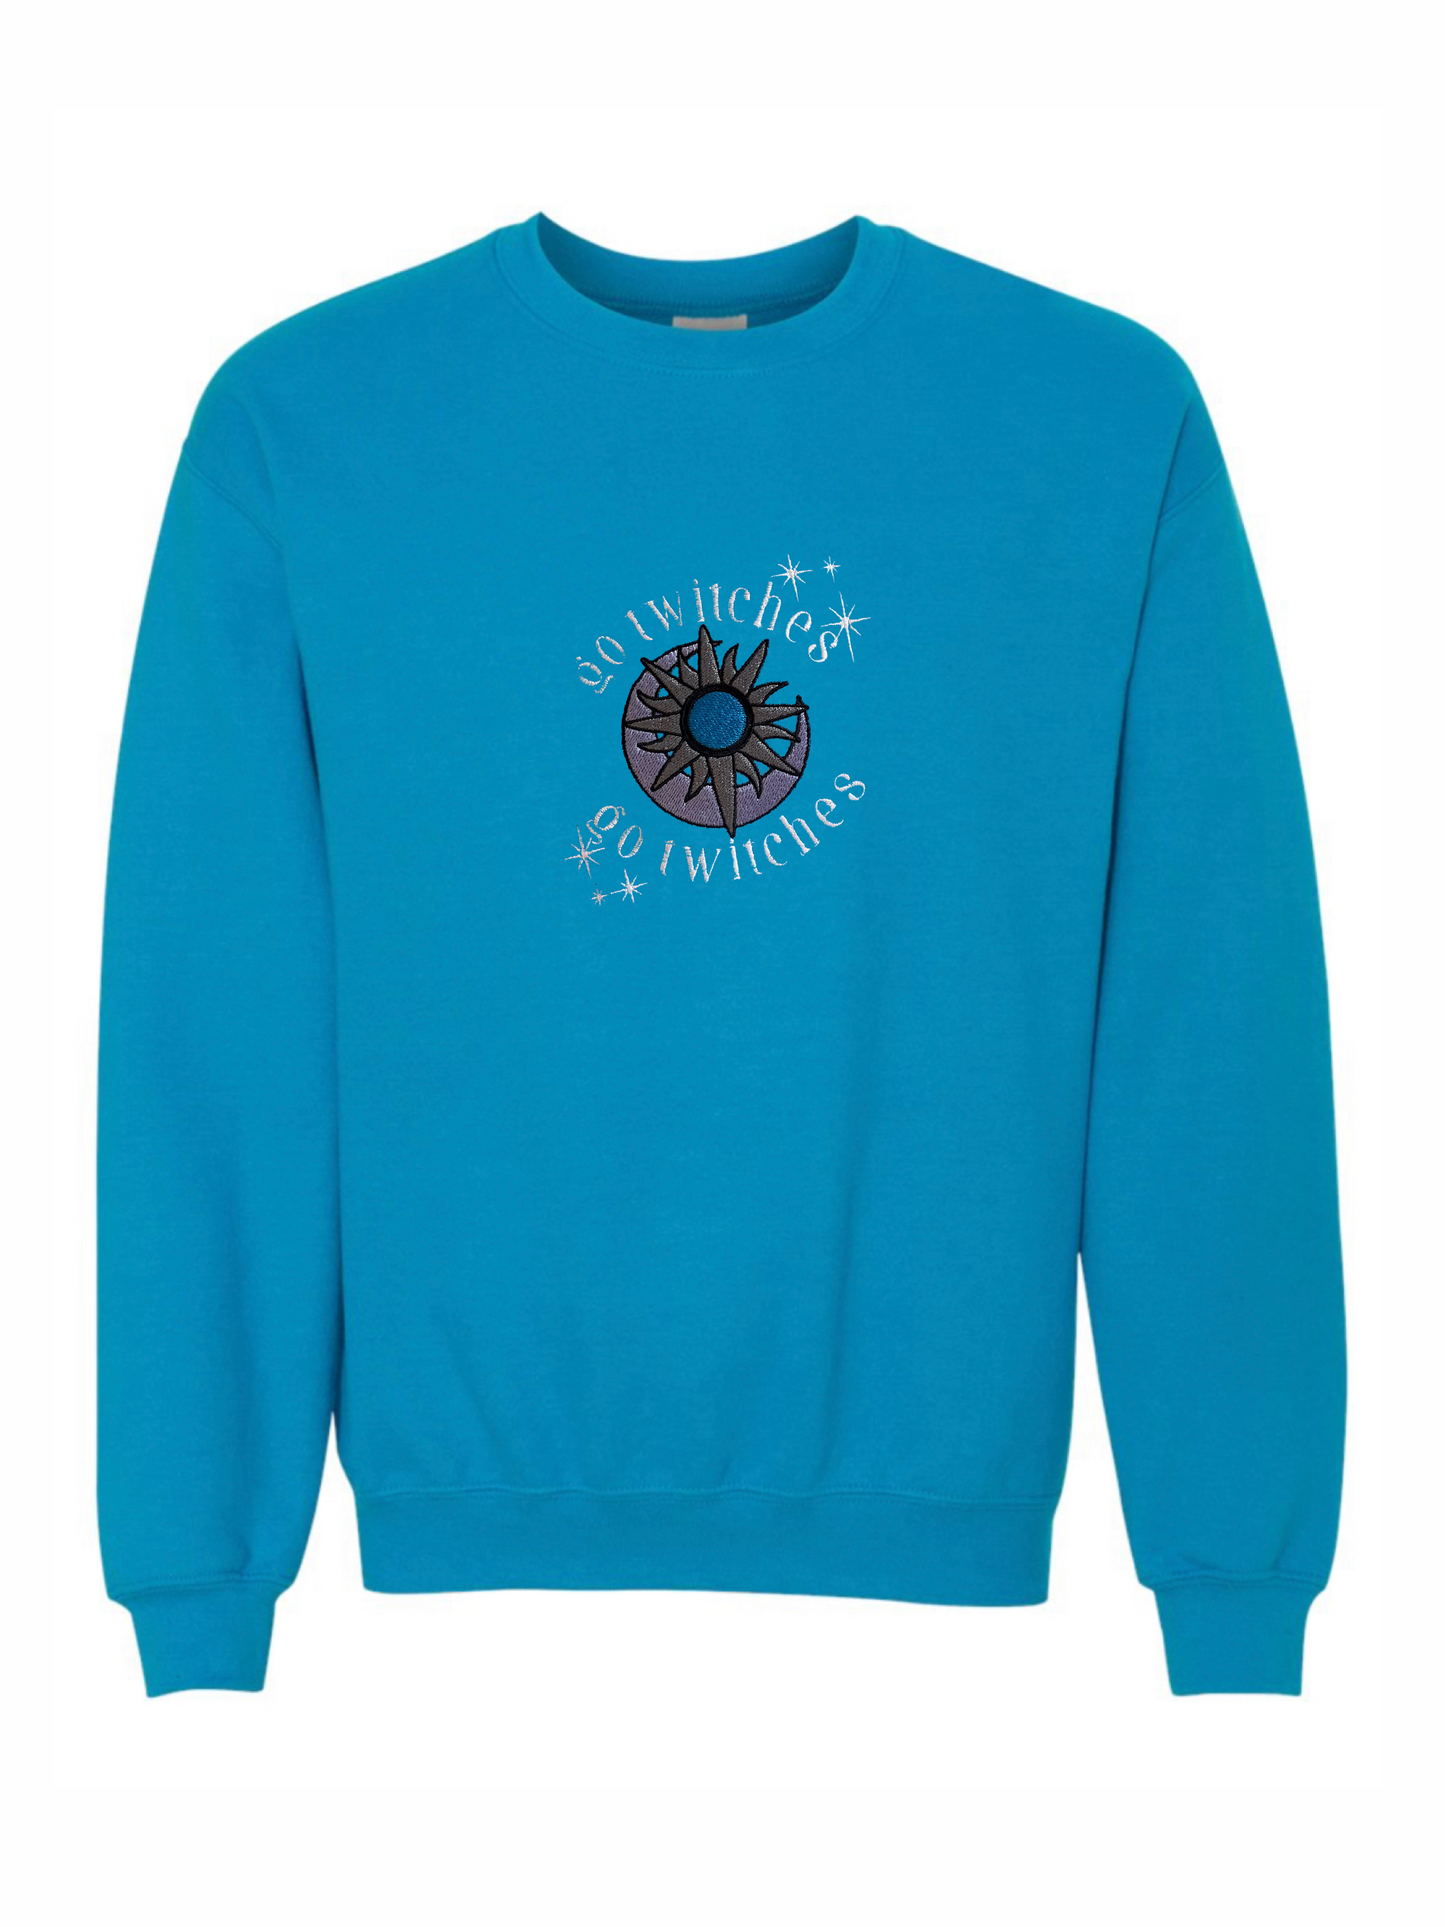 Go Twitches embroidered sweatshirt